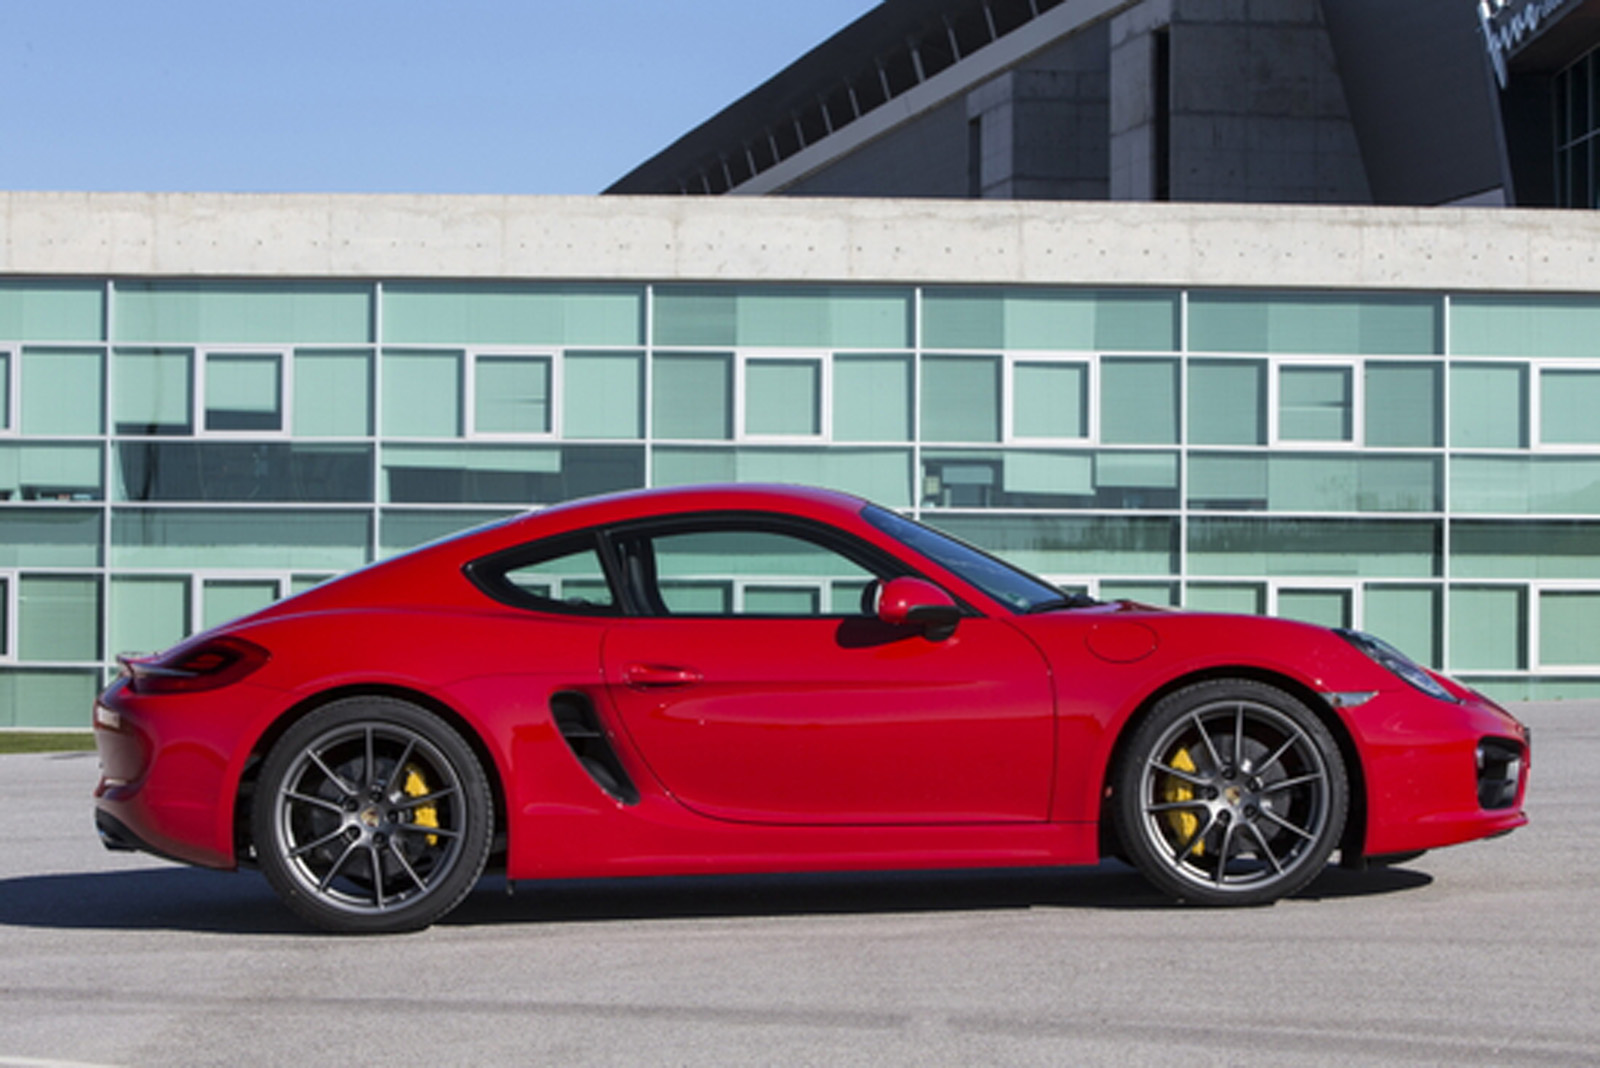 Car Review: 2014 Porsche Cayman S - The Washington Informer